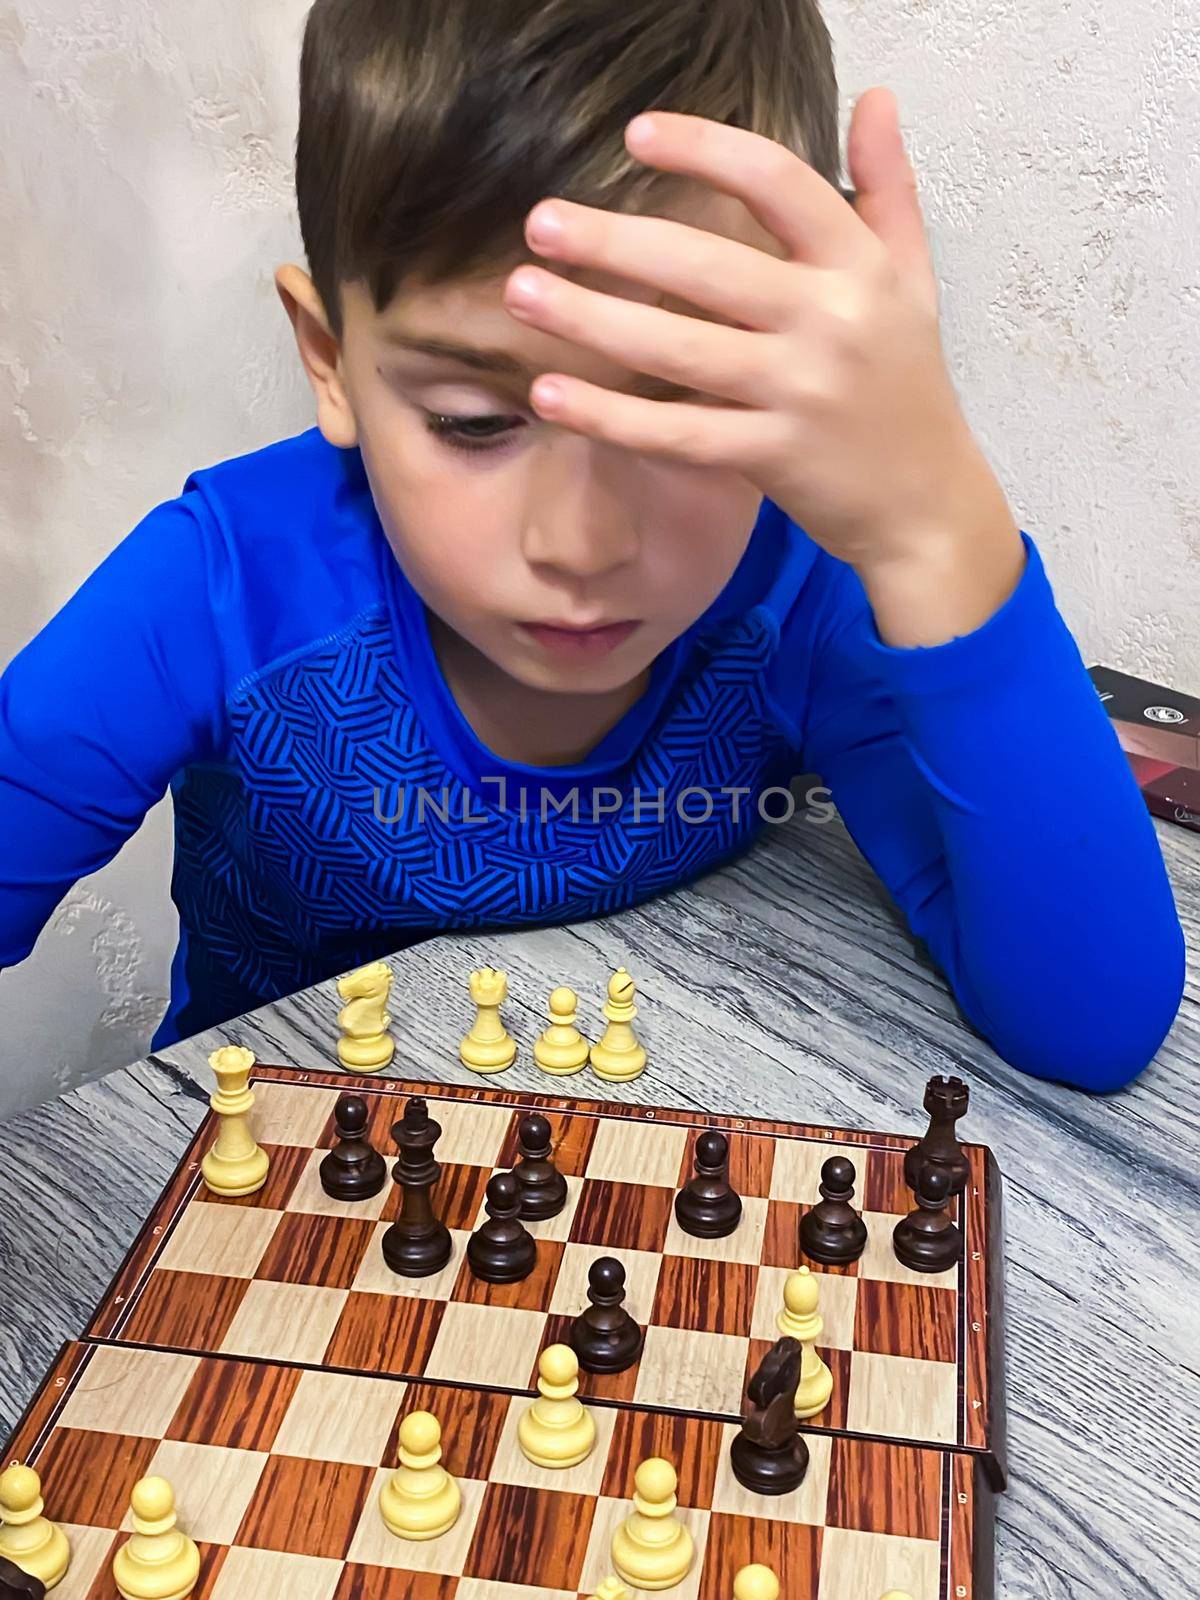 Five year old boy playing chess by palinchak